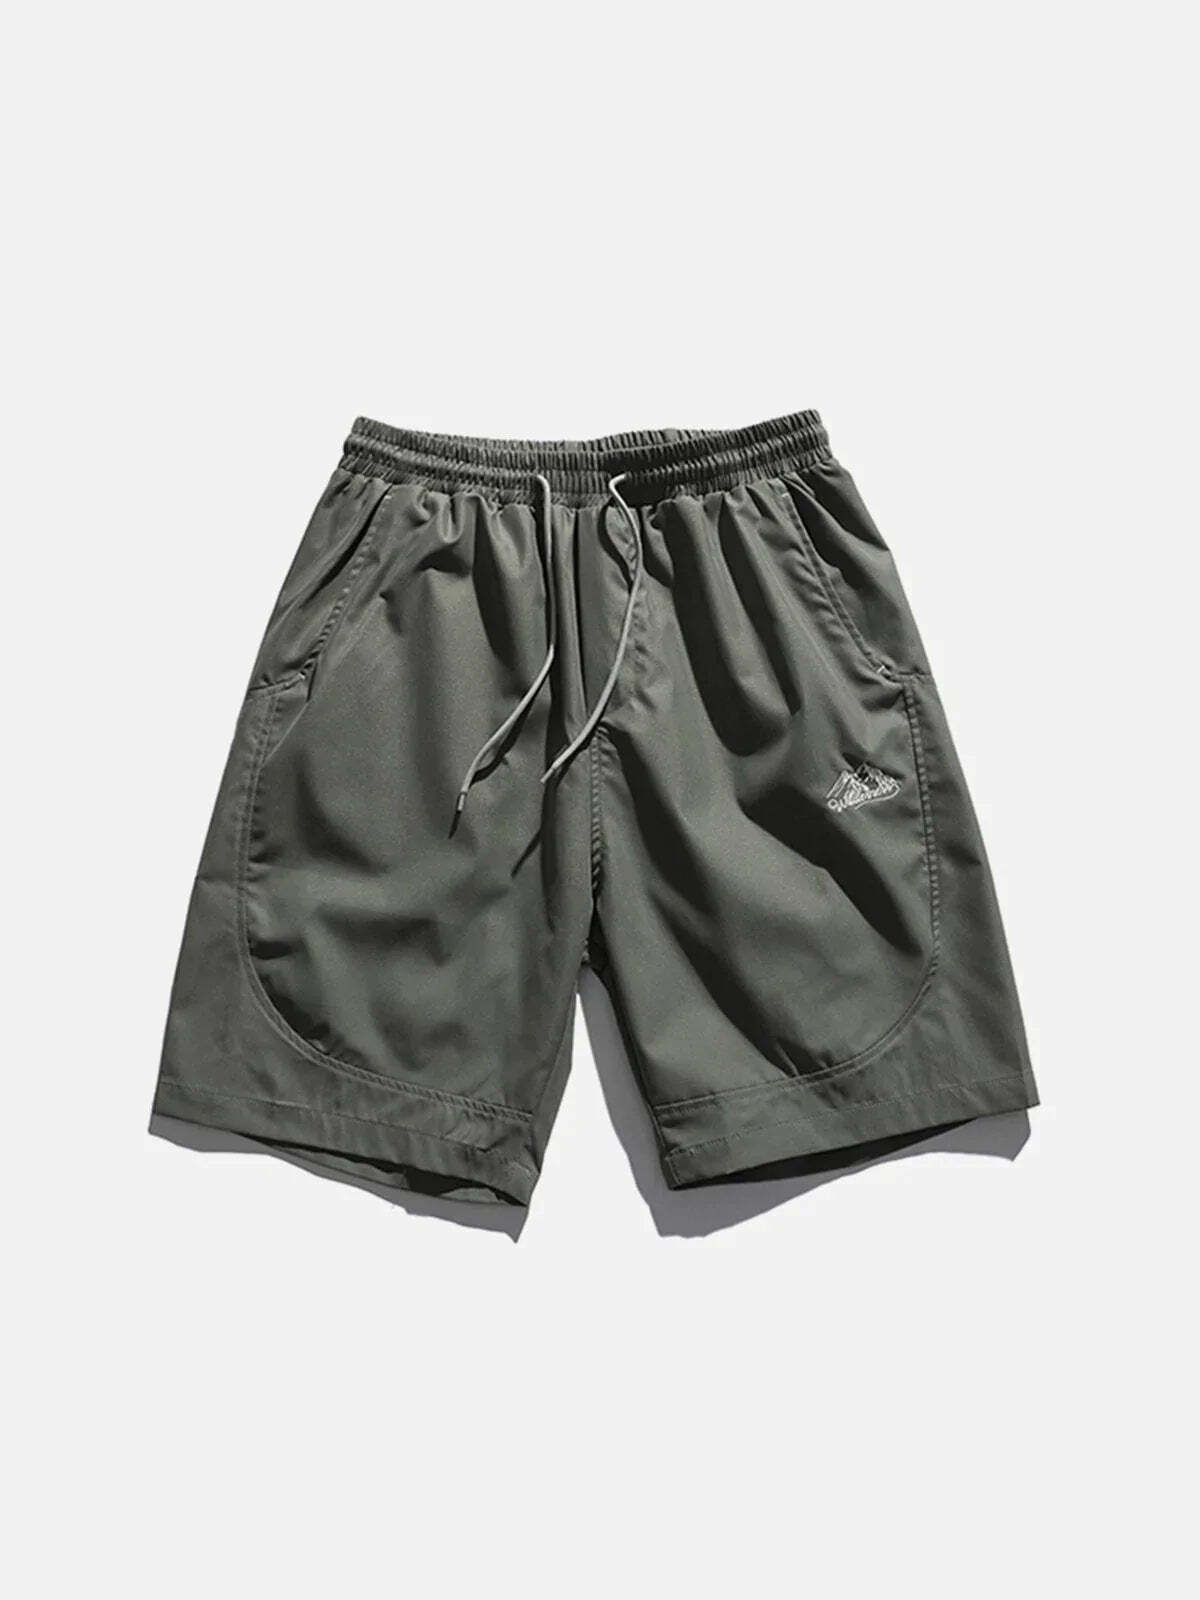 vintage mountain shorts retro outdoor adventure wear 8117